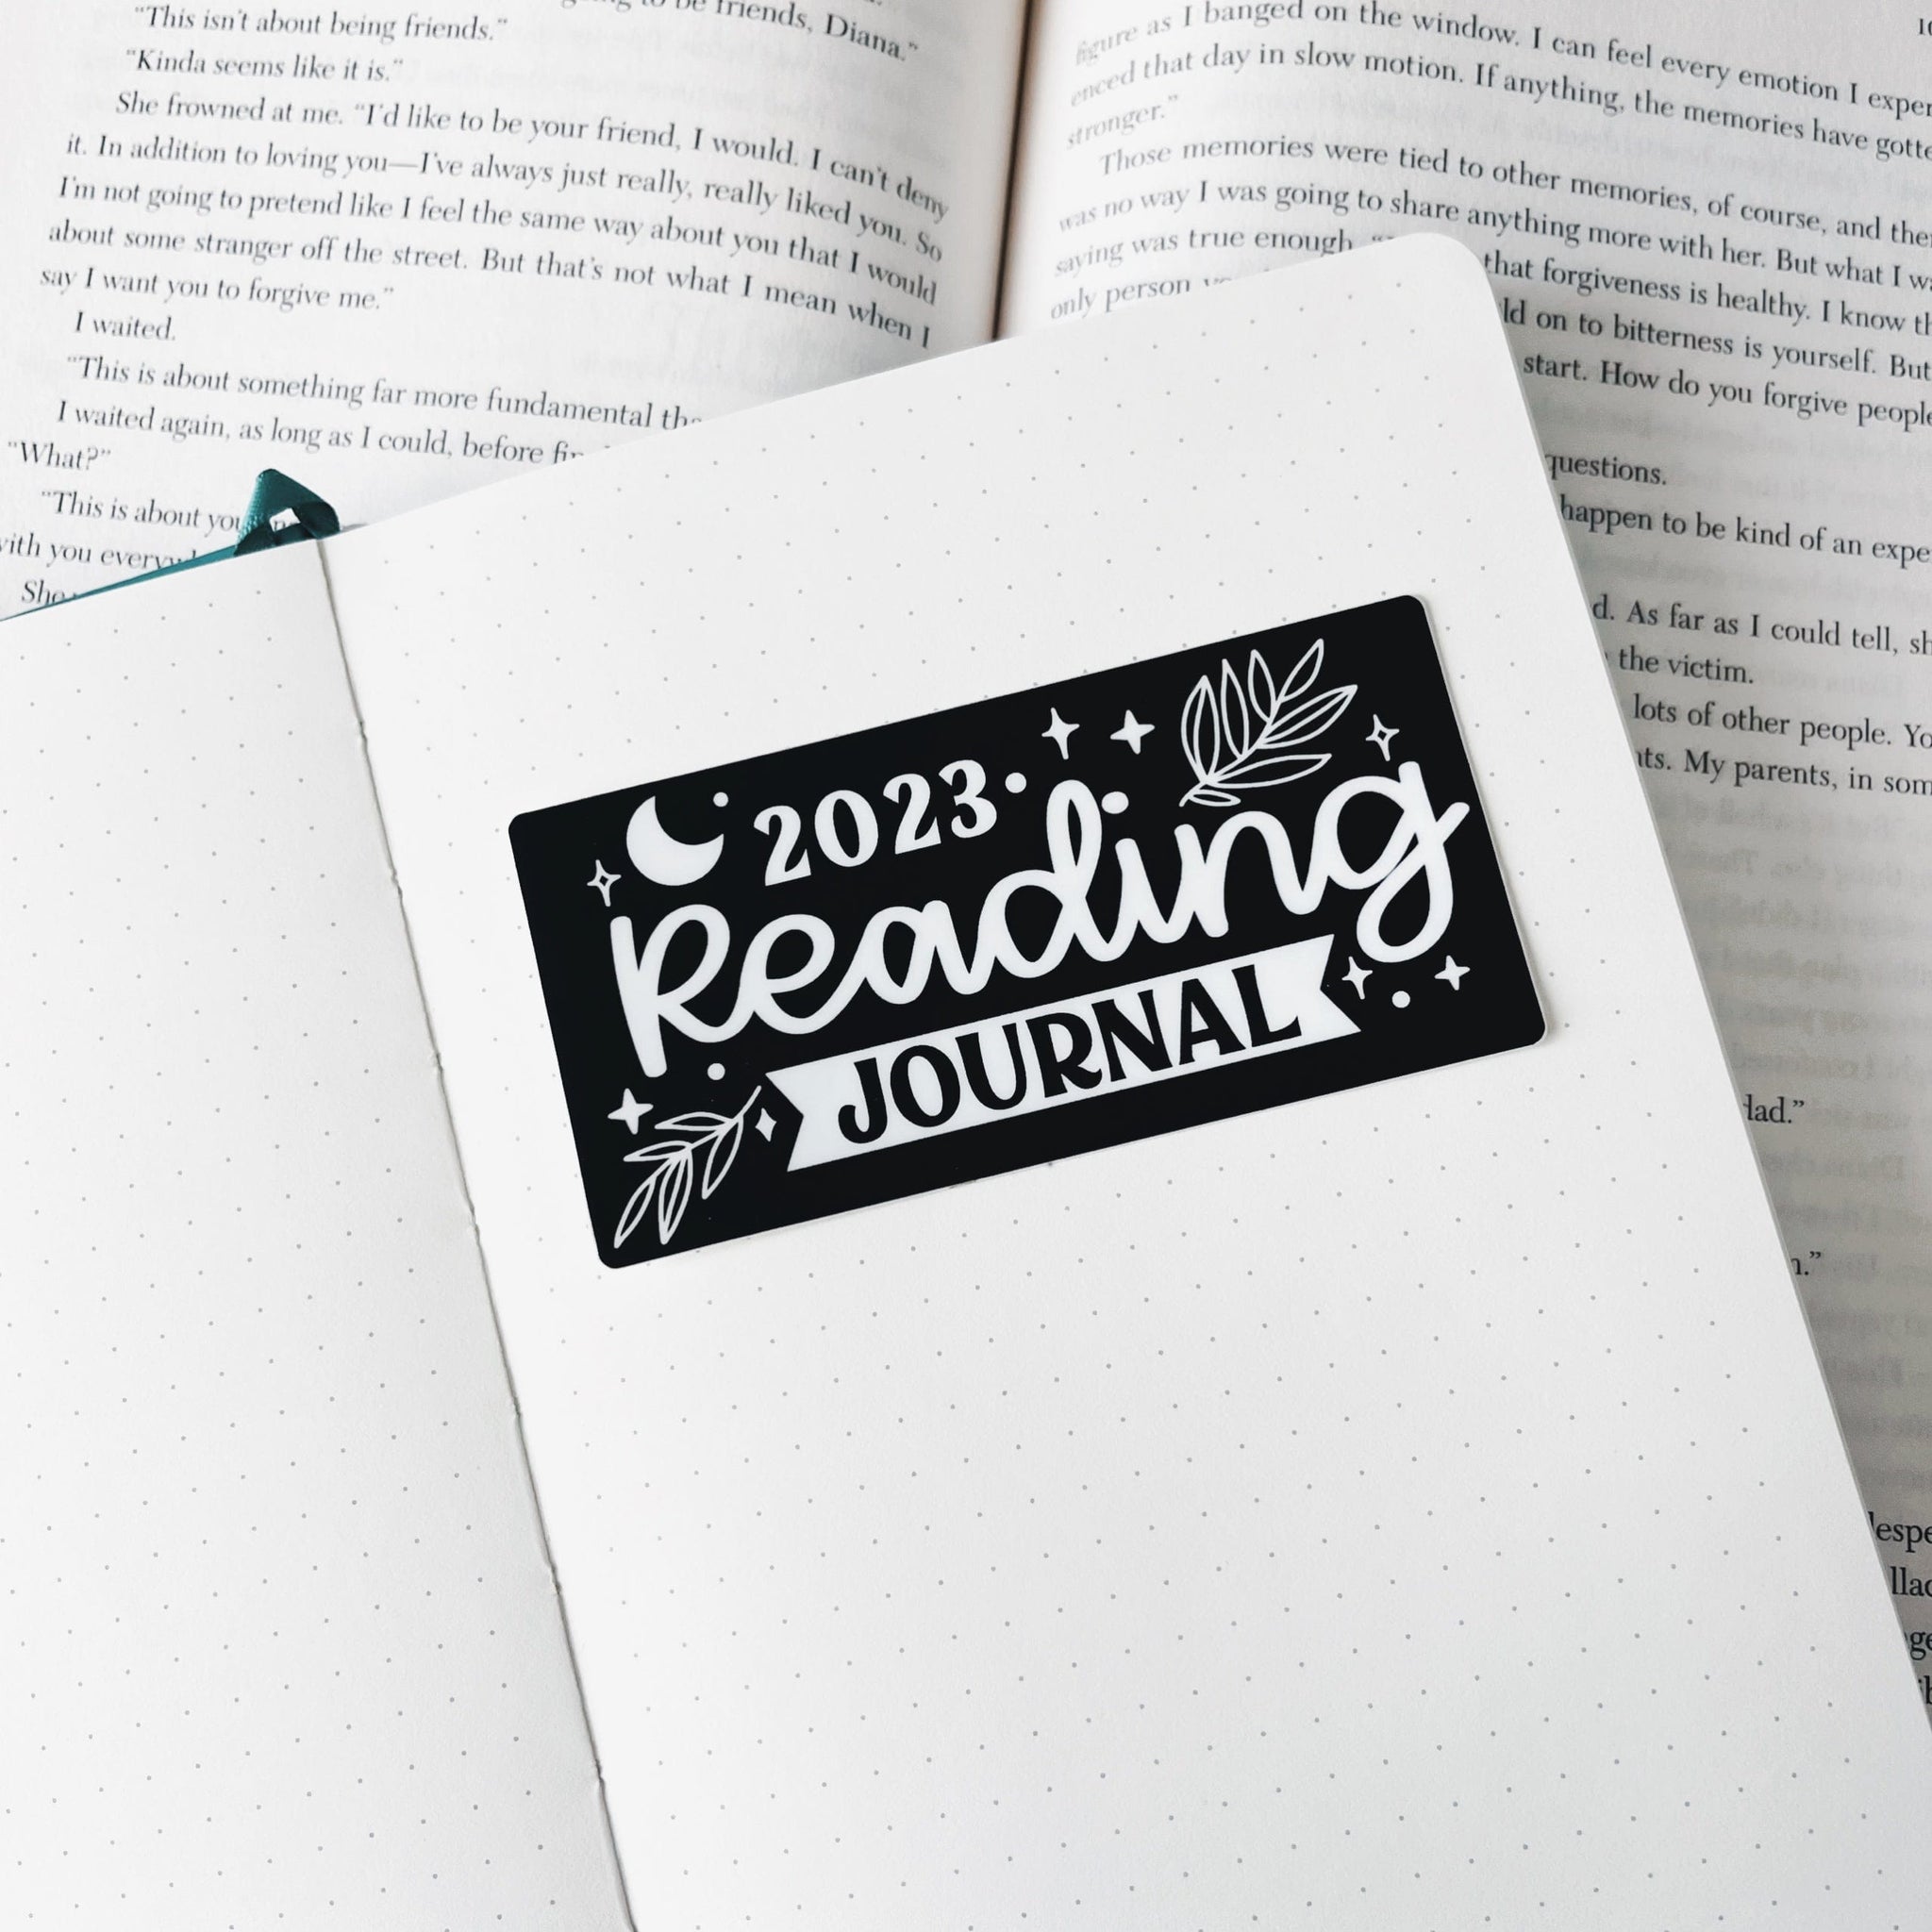 2023 Reading Journal Sticker – My Secret Copy